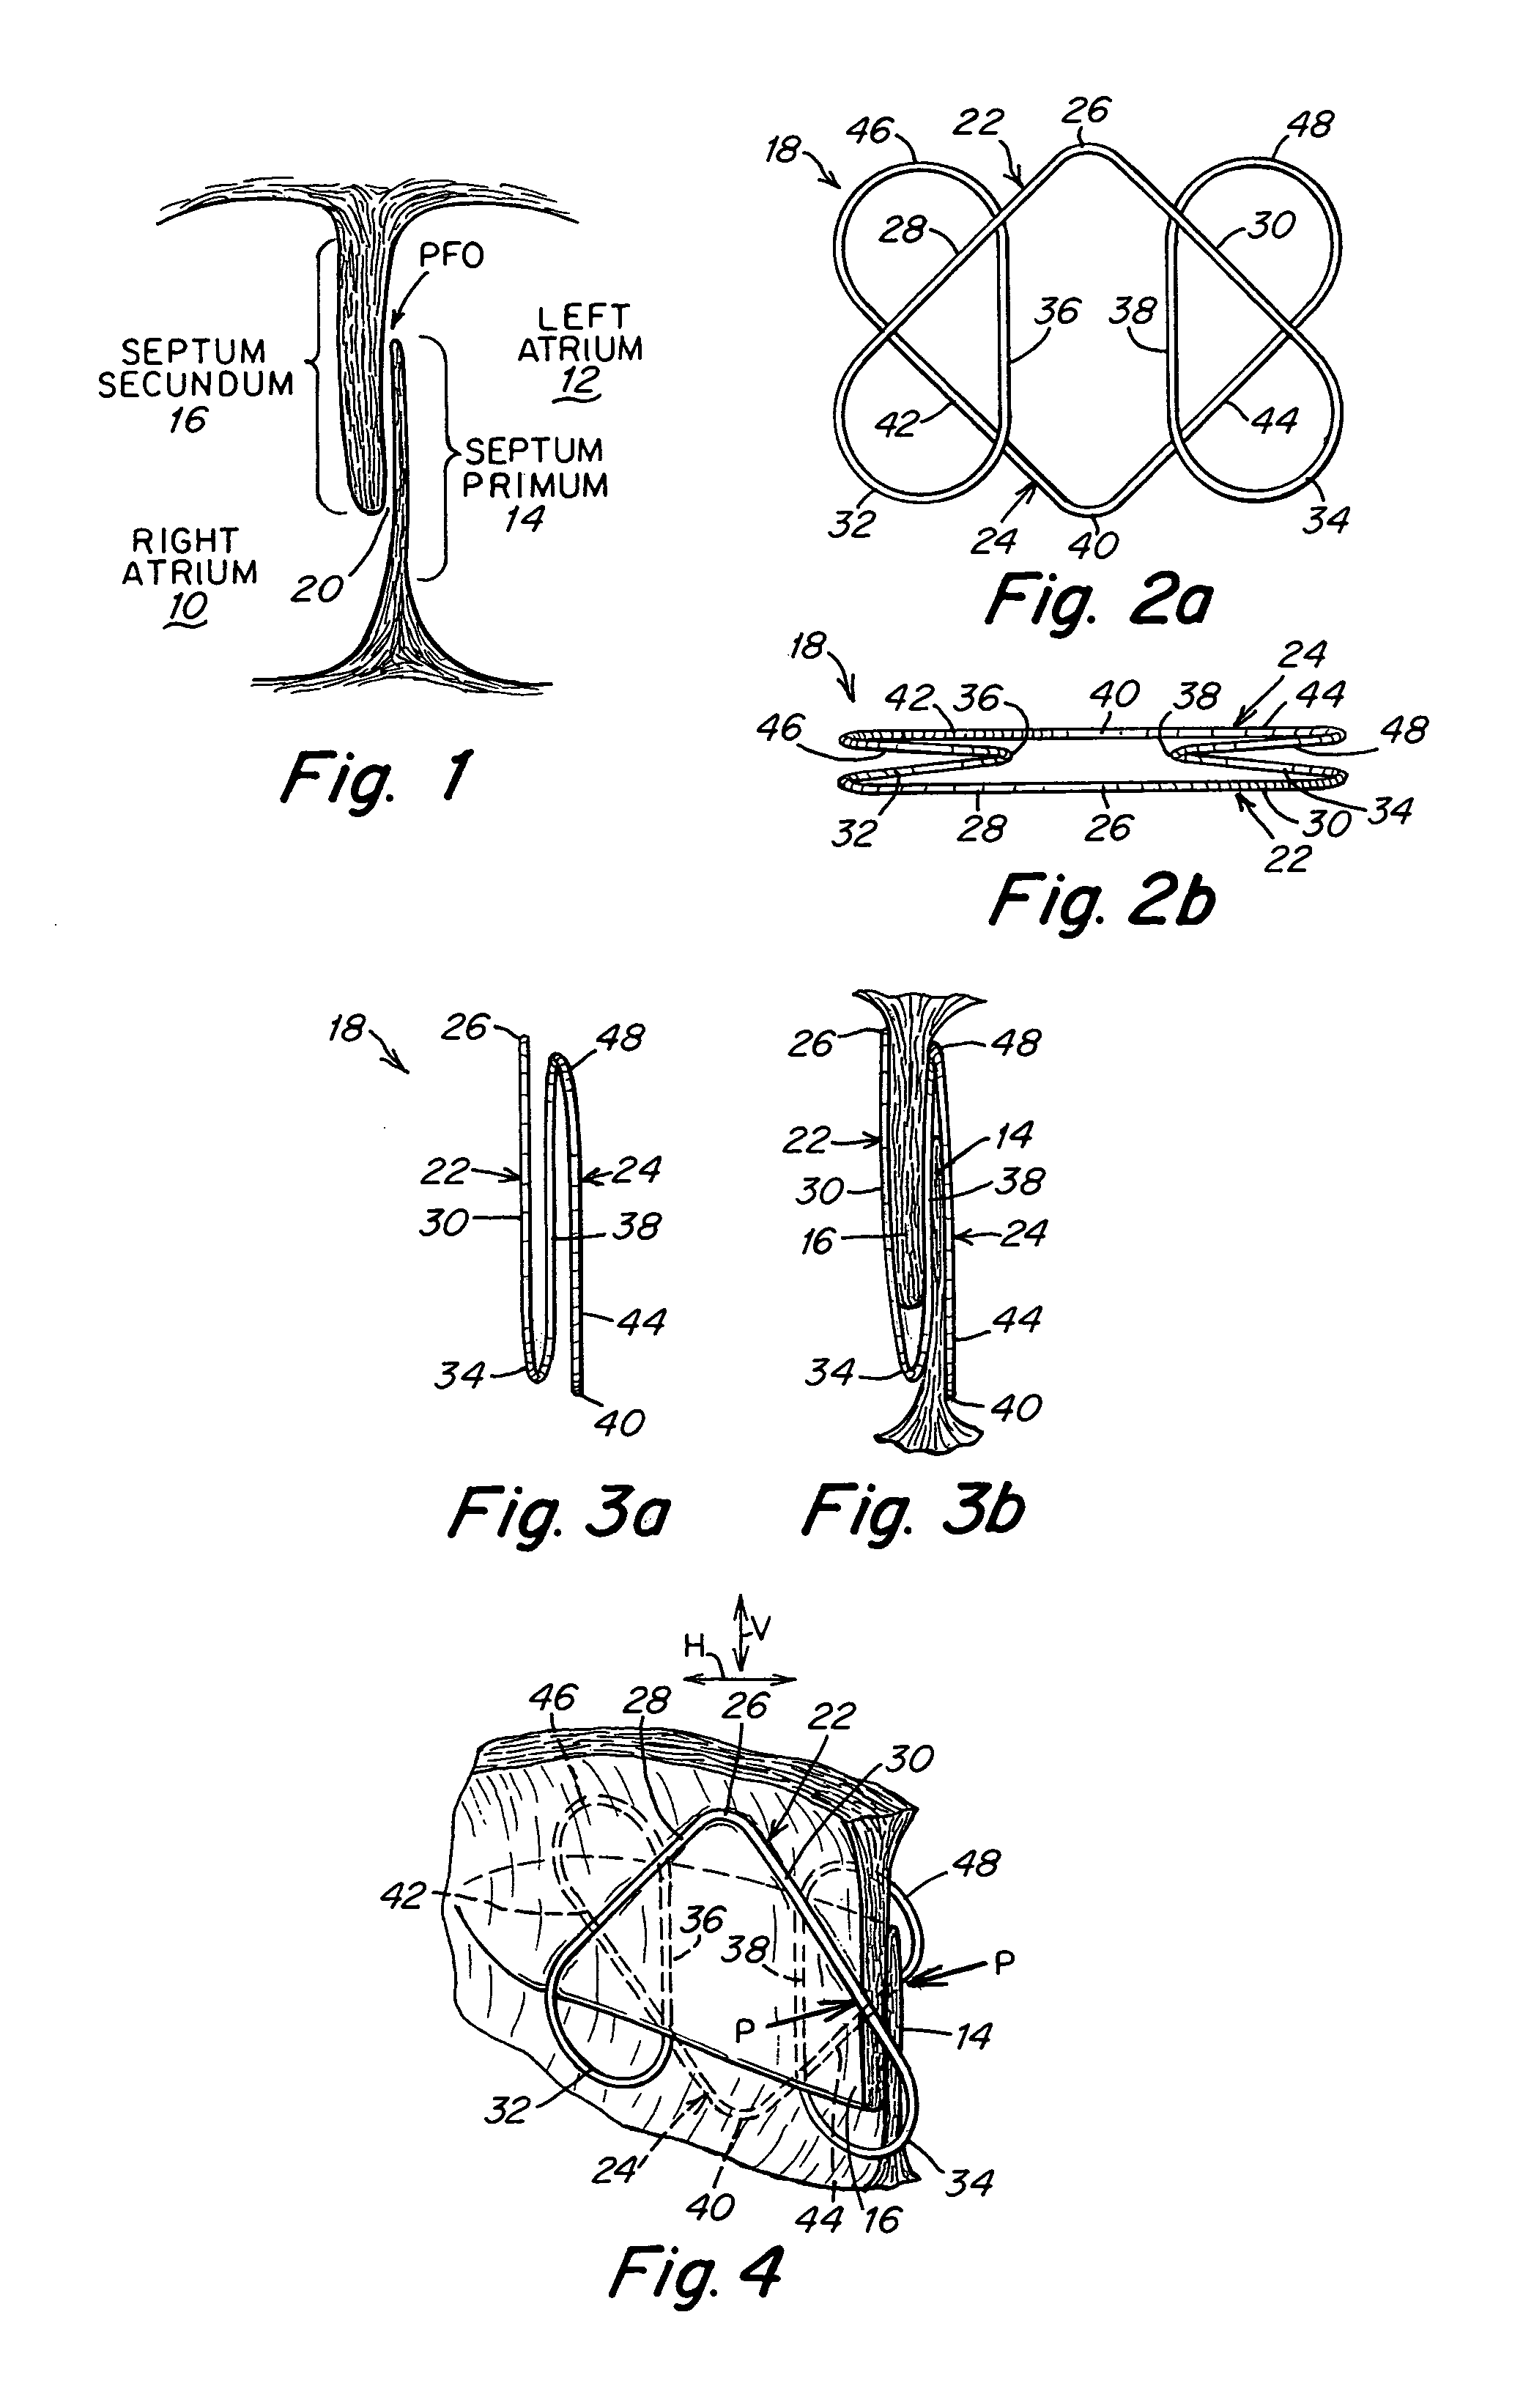 Patent foramen ovale (PFO) closure clips